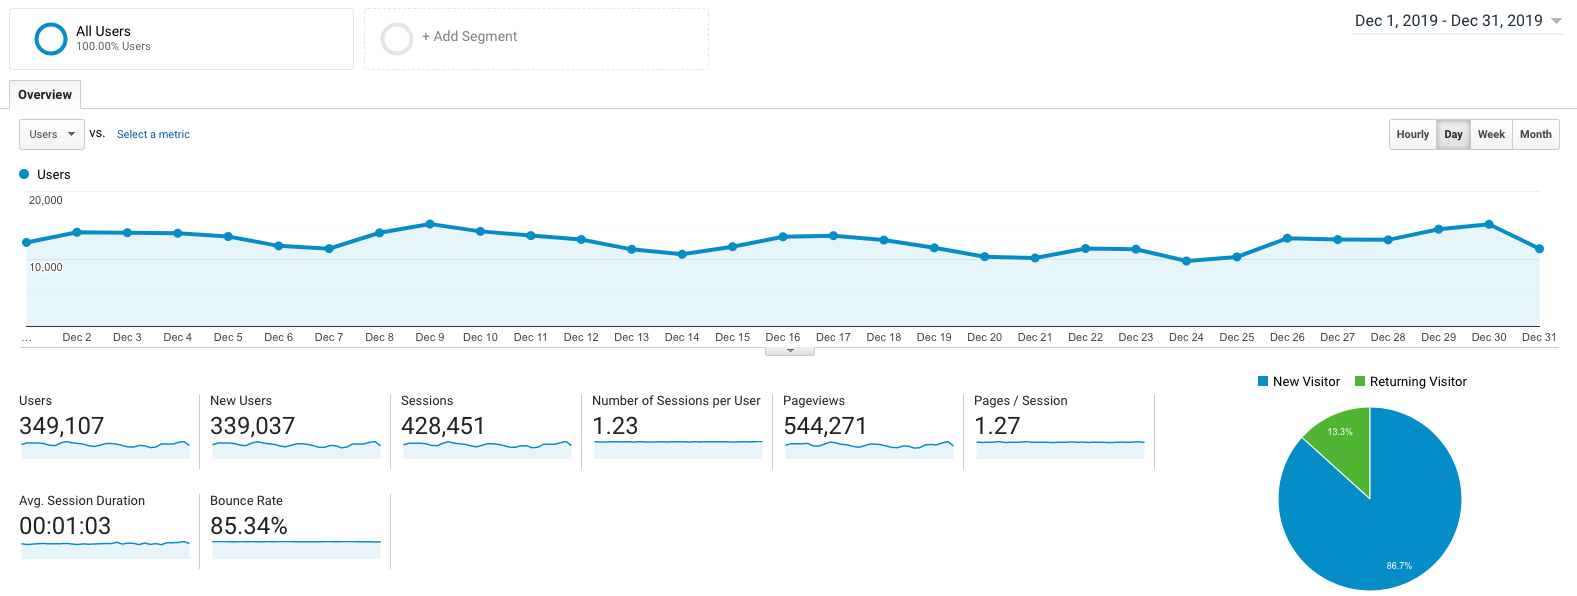 Blog Income Report for December 2019 Ryan Robinson Google Analytics Traffic Screenshot